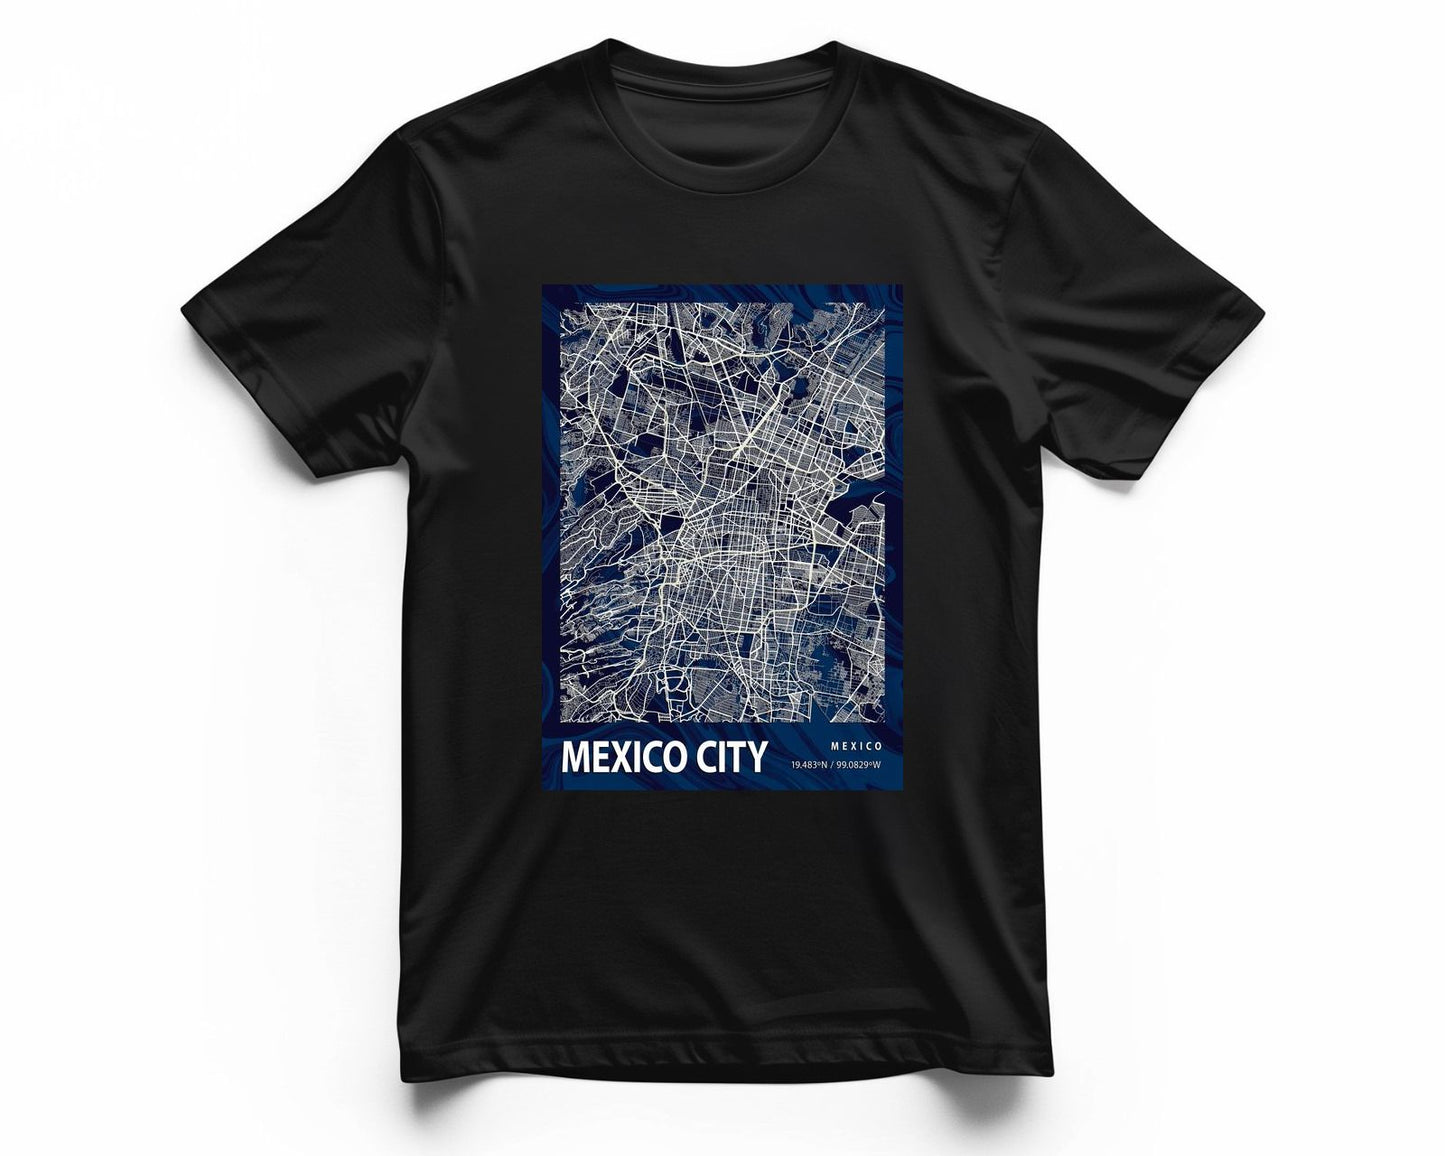 MEXICO CITY CROCUS MARBLE MAP - @Helios